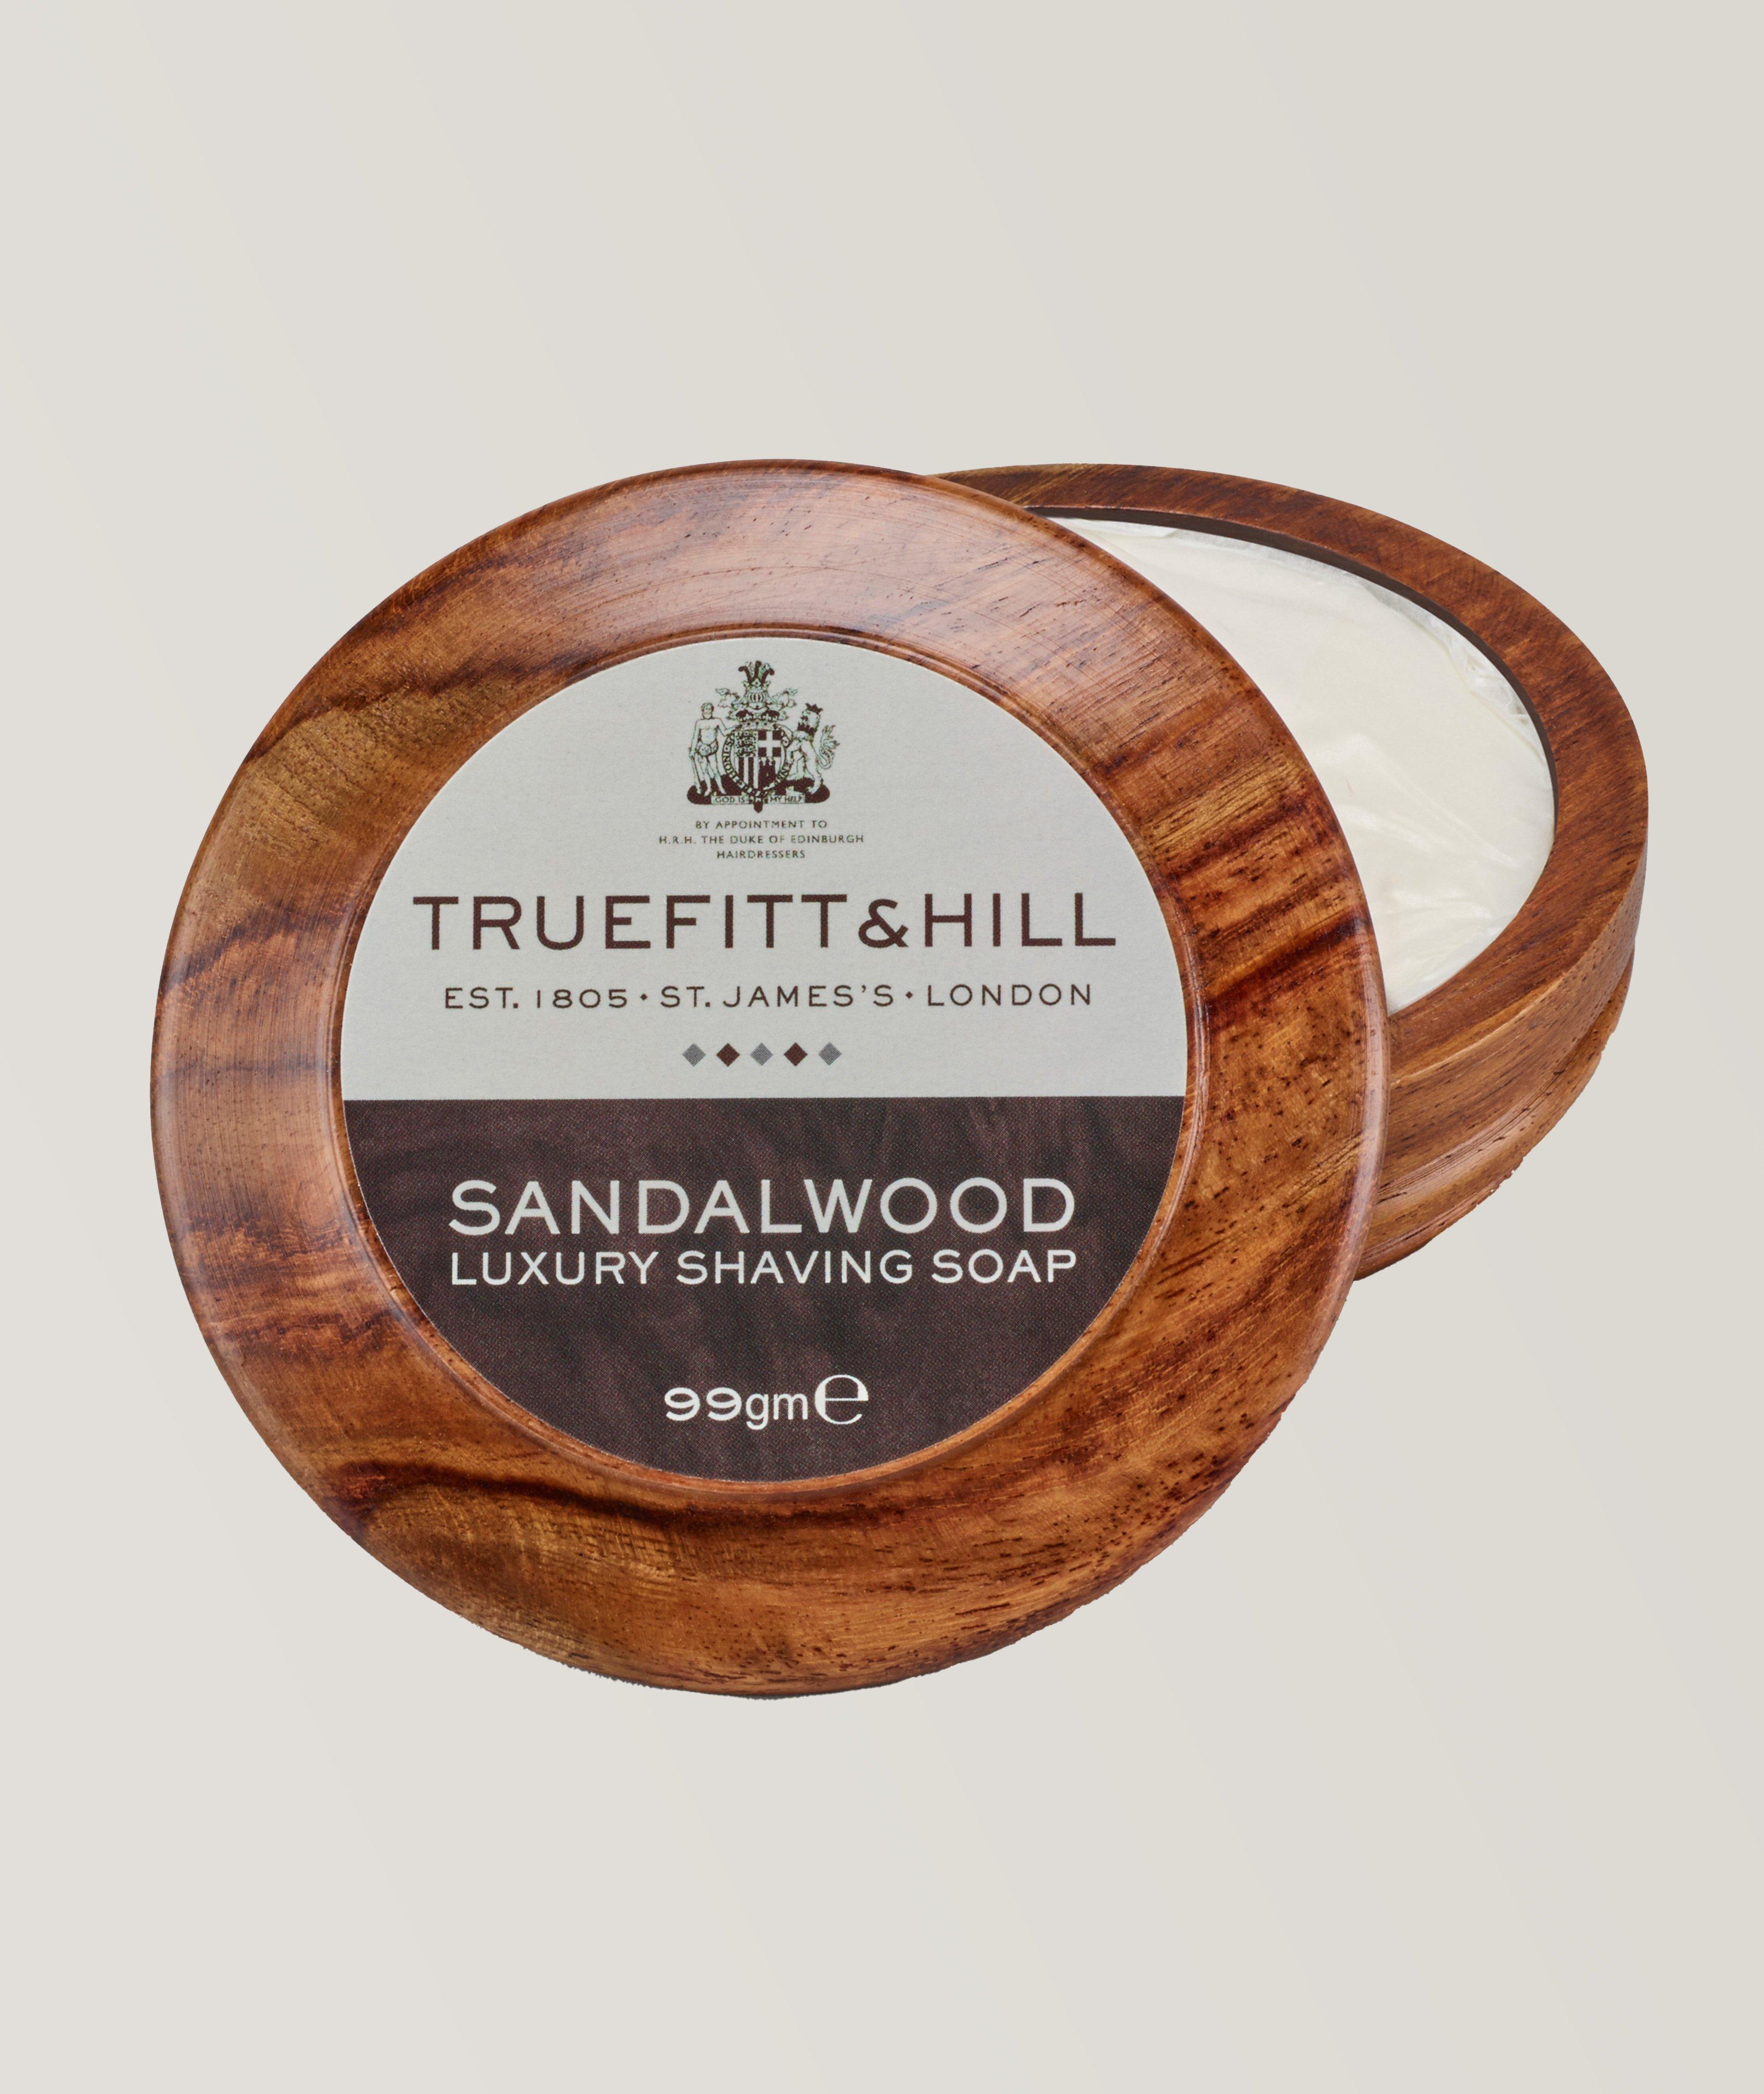 Sandalwood Lux Shaving Soap in Wooden Bowl image 0